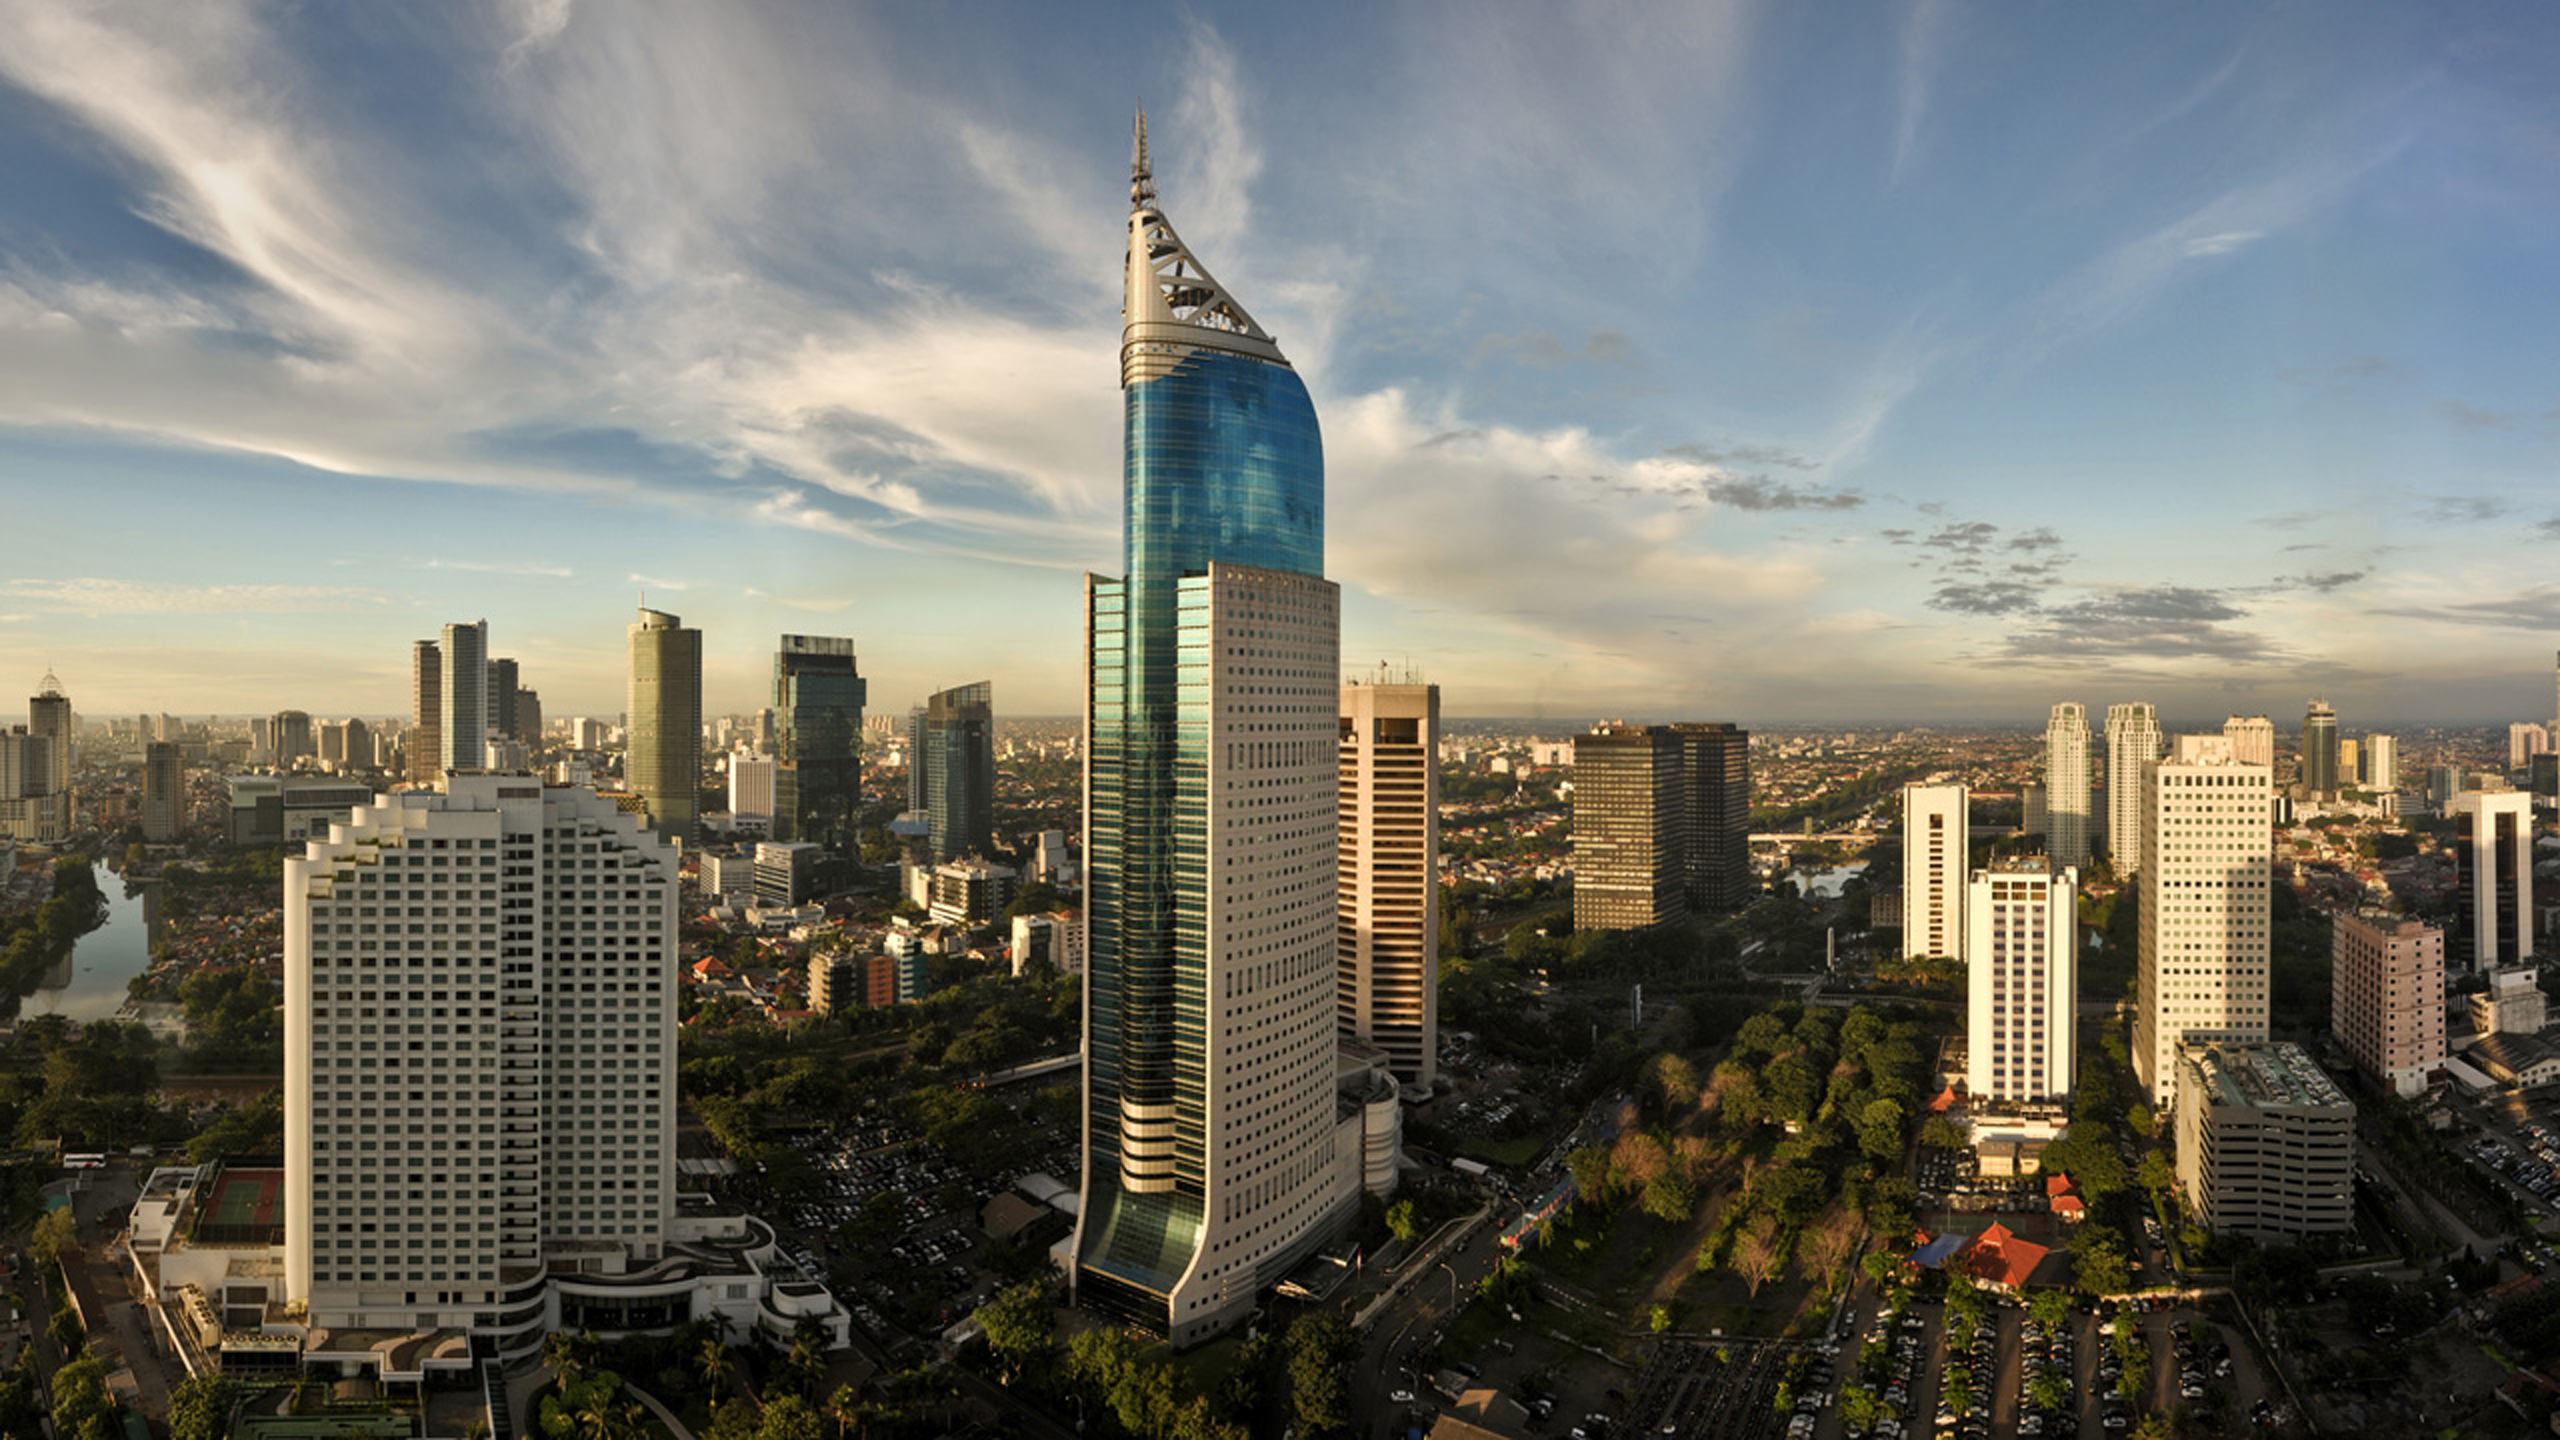 Jakarta Indonesia , HD Wallpaper & Backgrounds